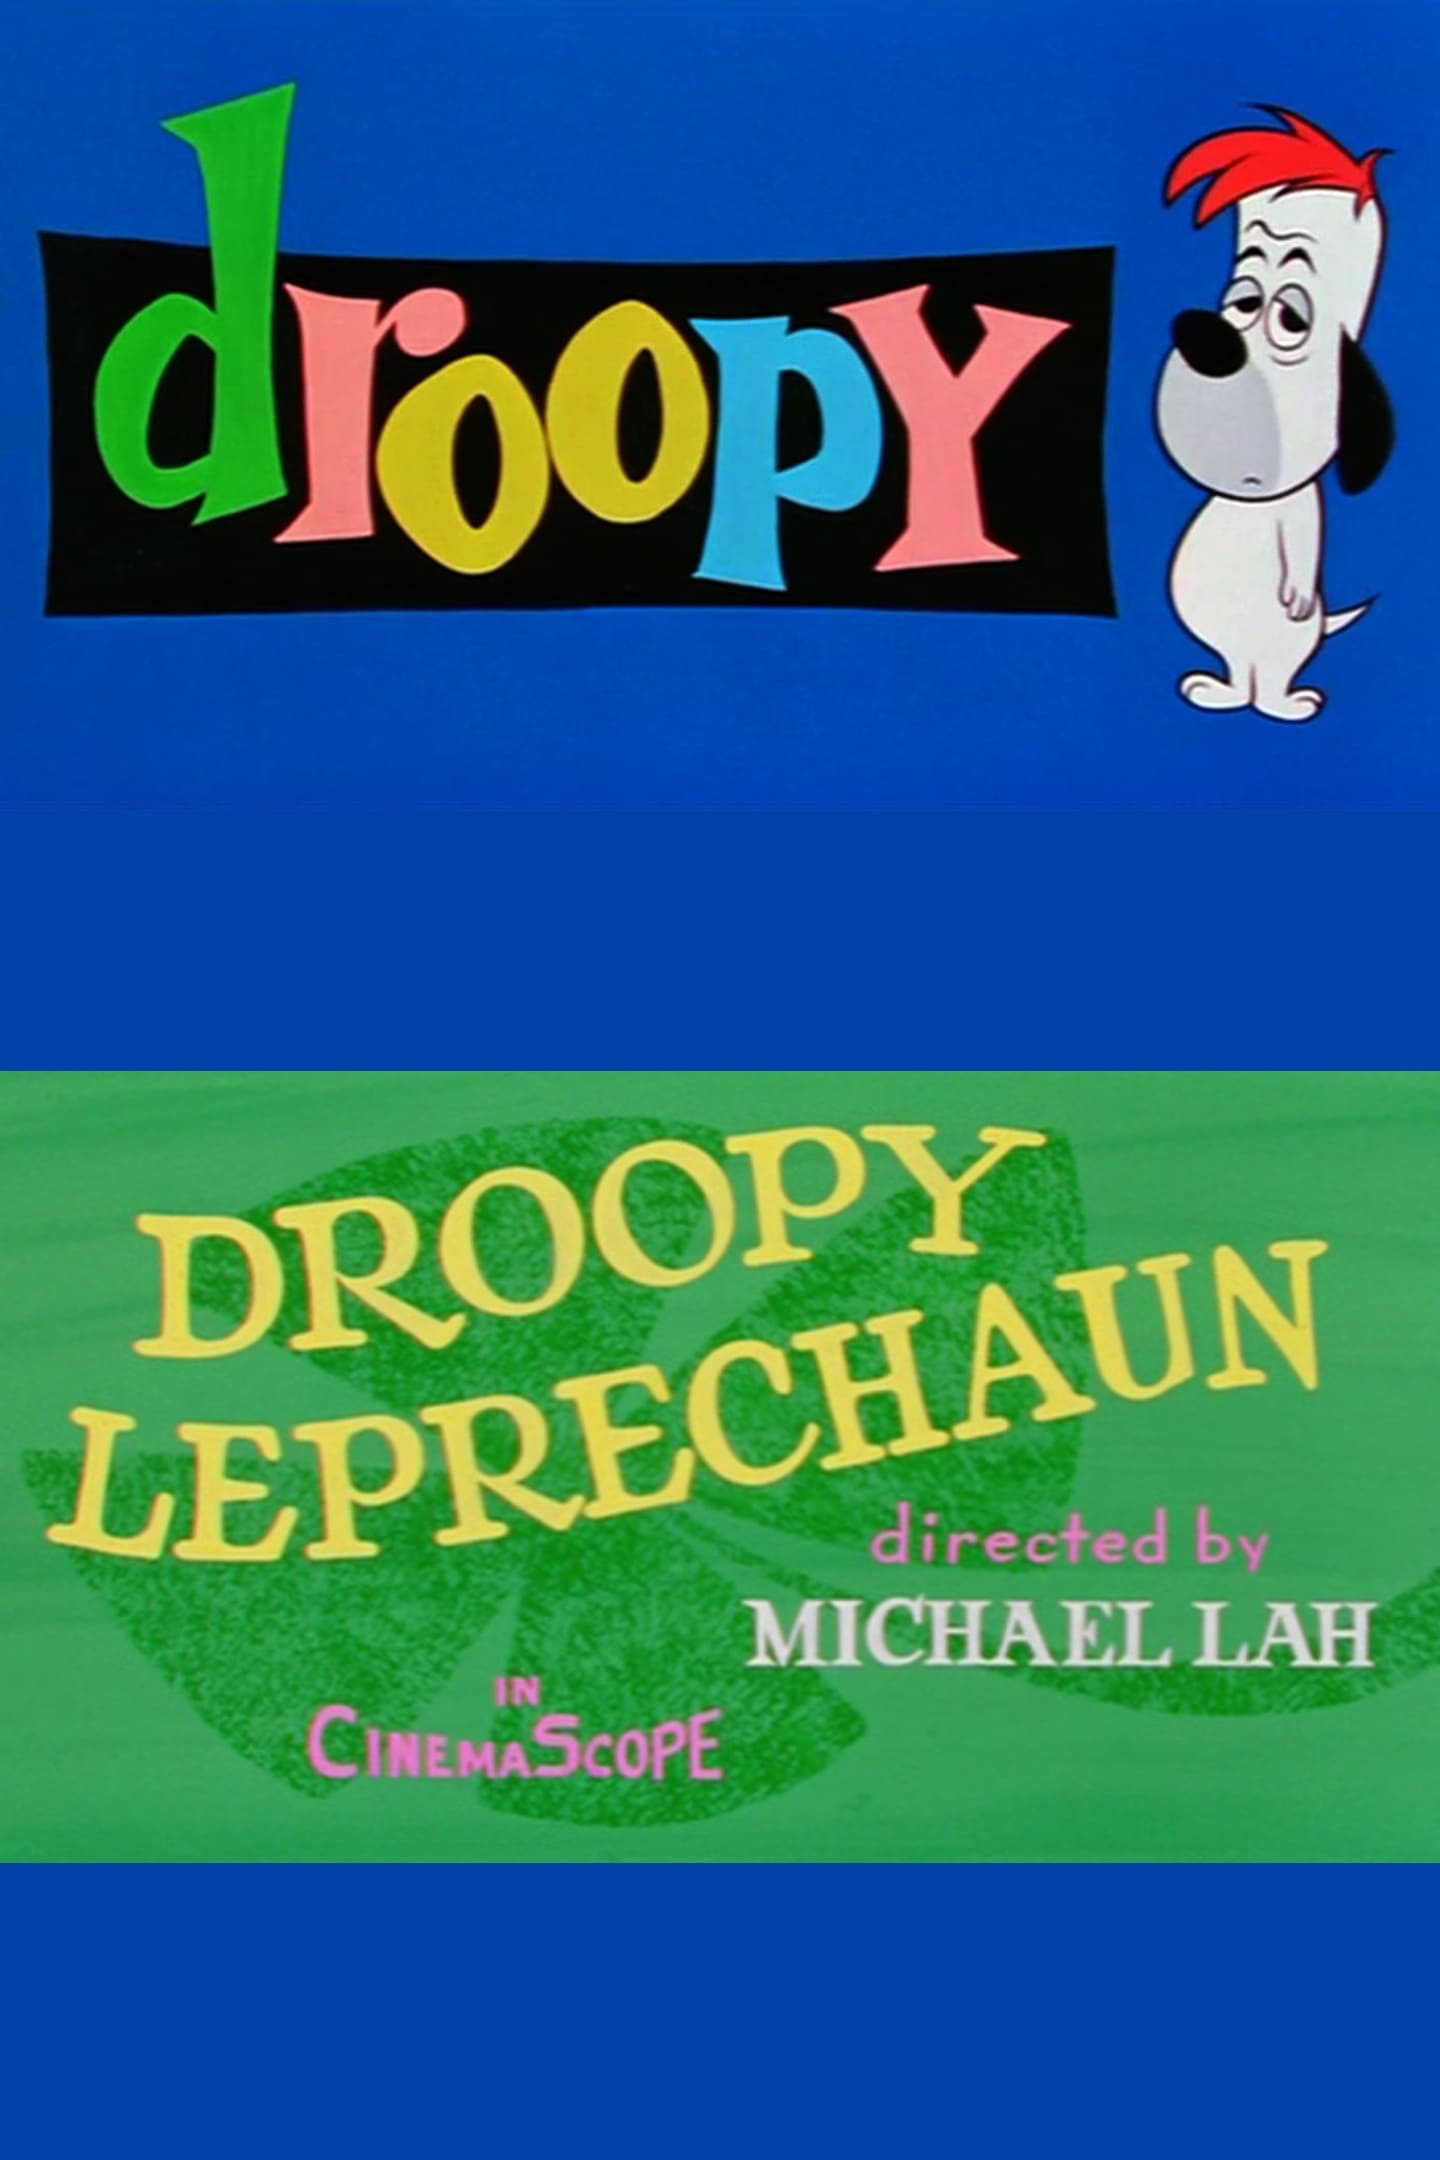 Droopy Leprechaun (1958)